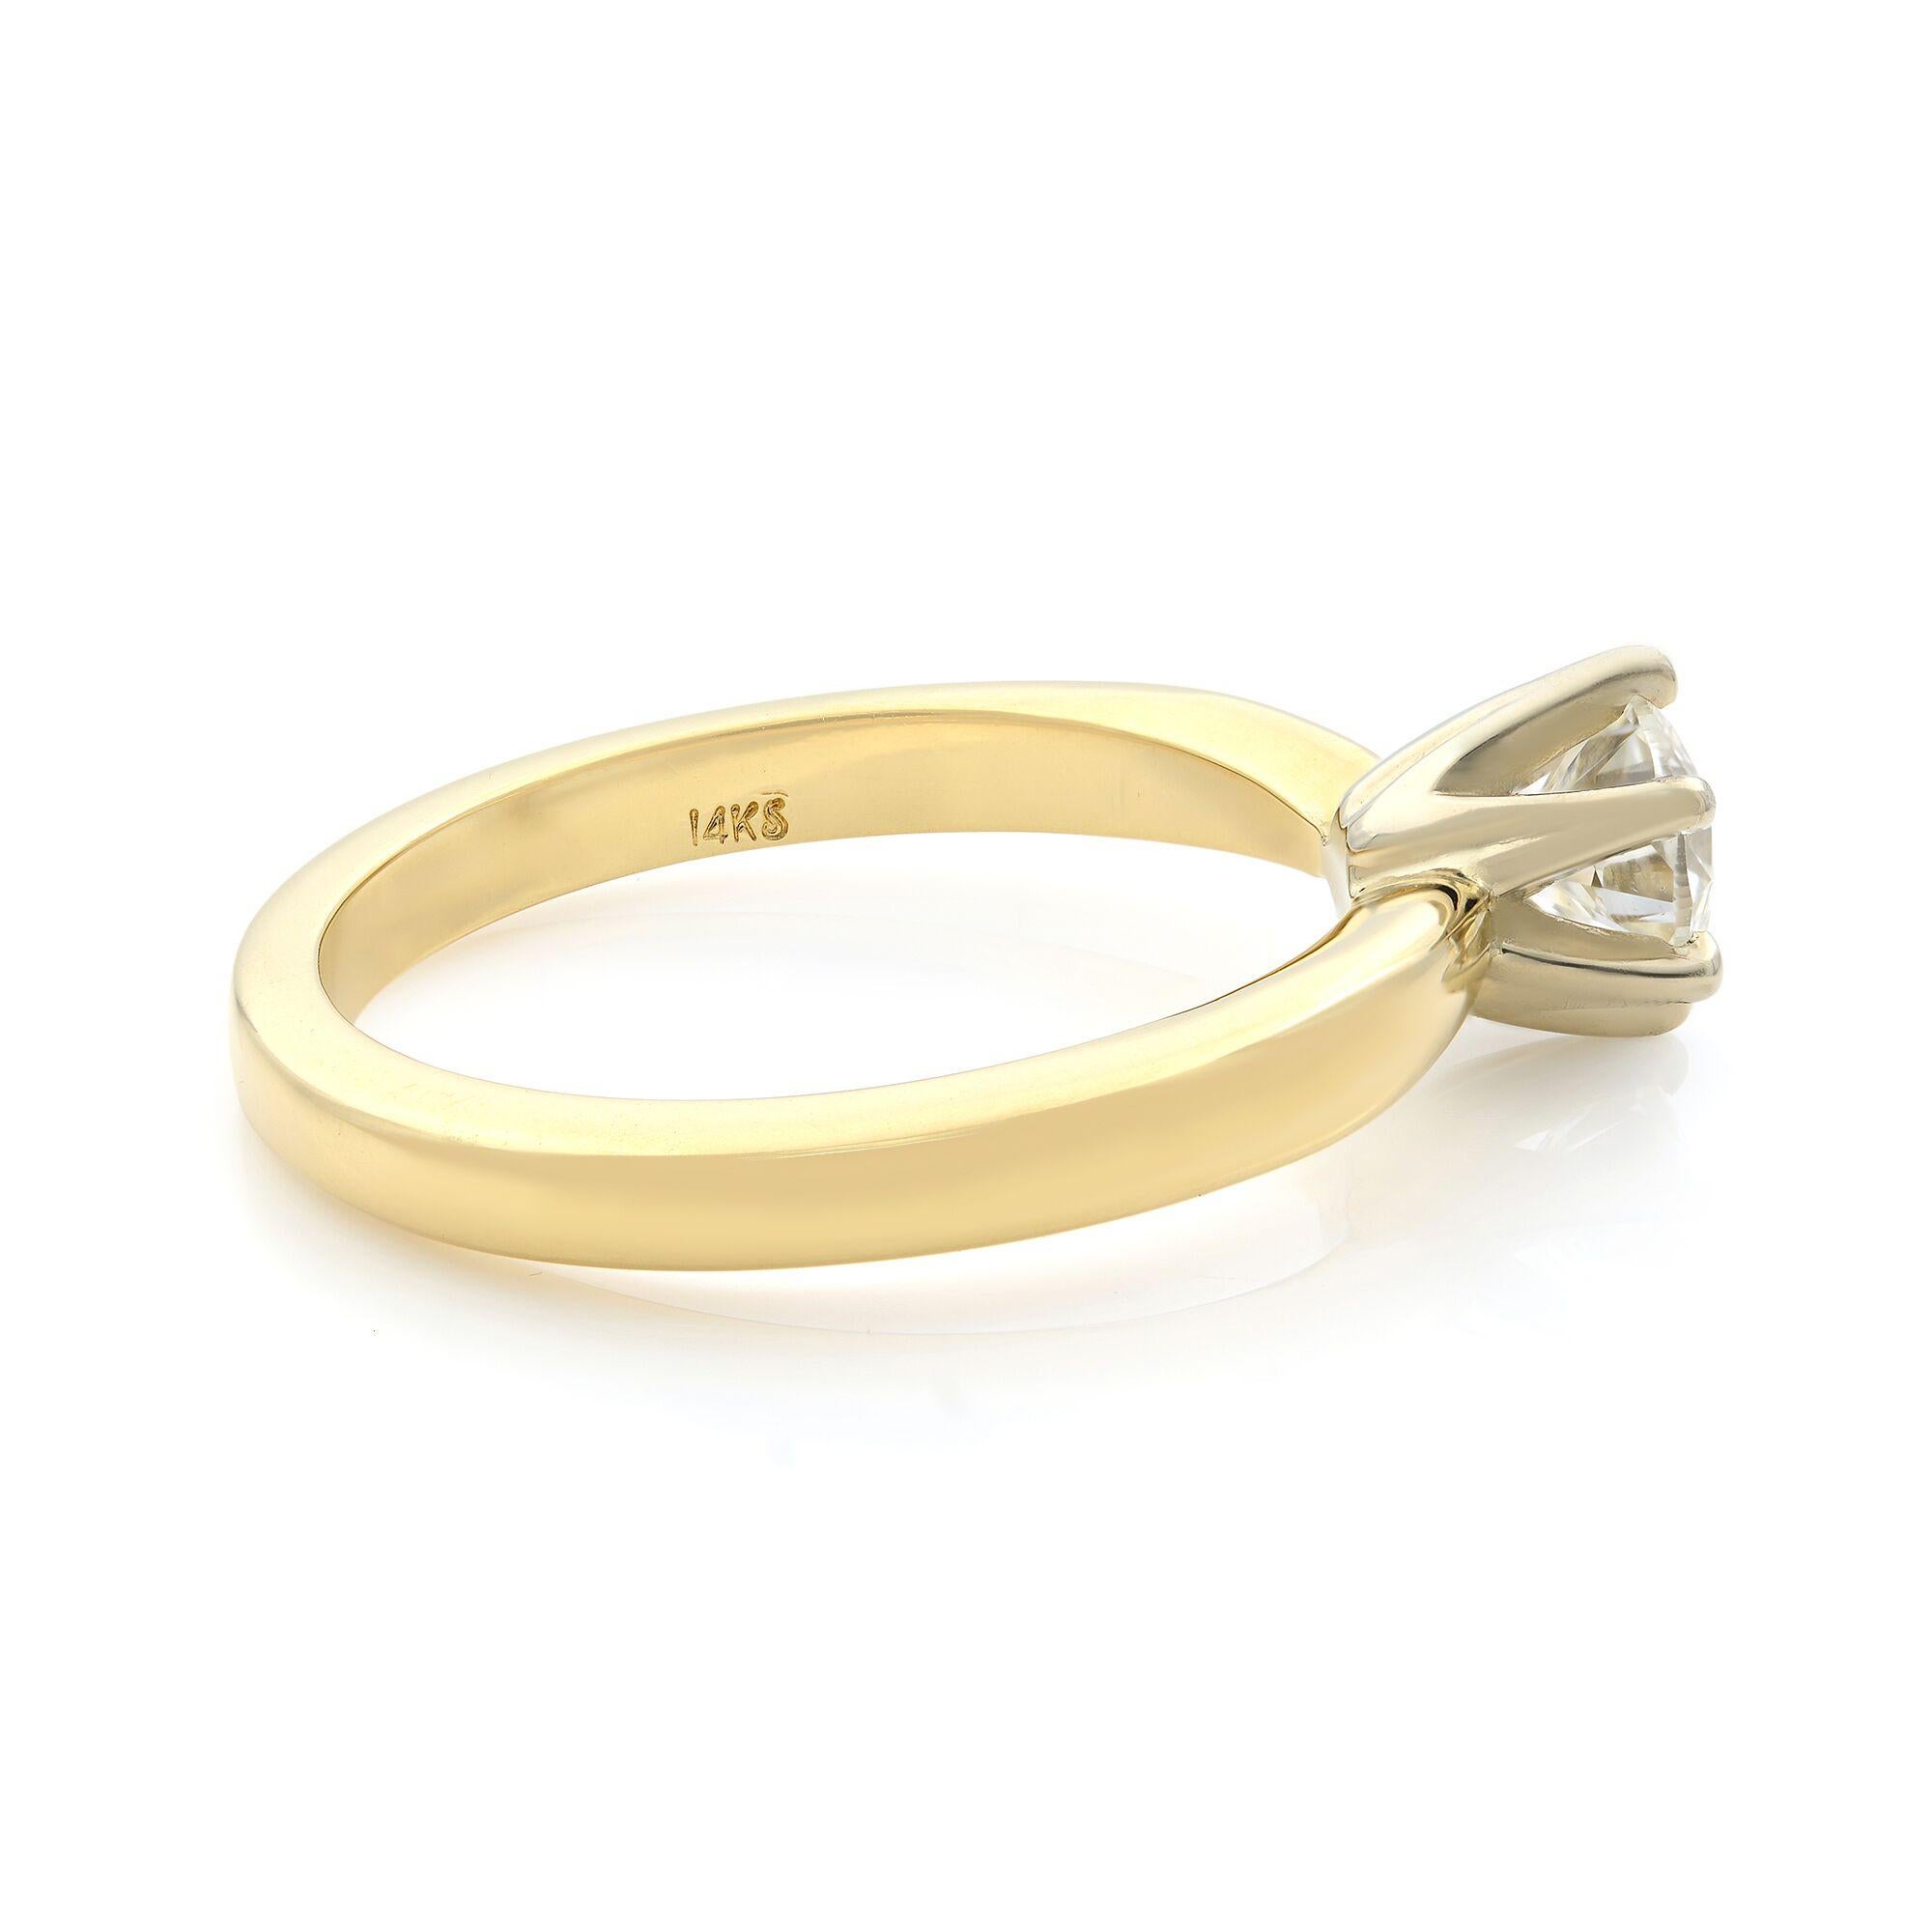 Round Cut Rachel Koen Diamond Solitaire Engagement Ring 14K Yellow Gold 0.70Cttw For Sale